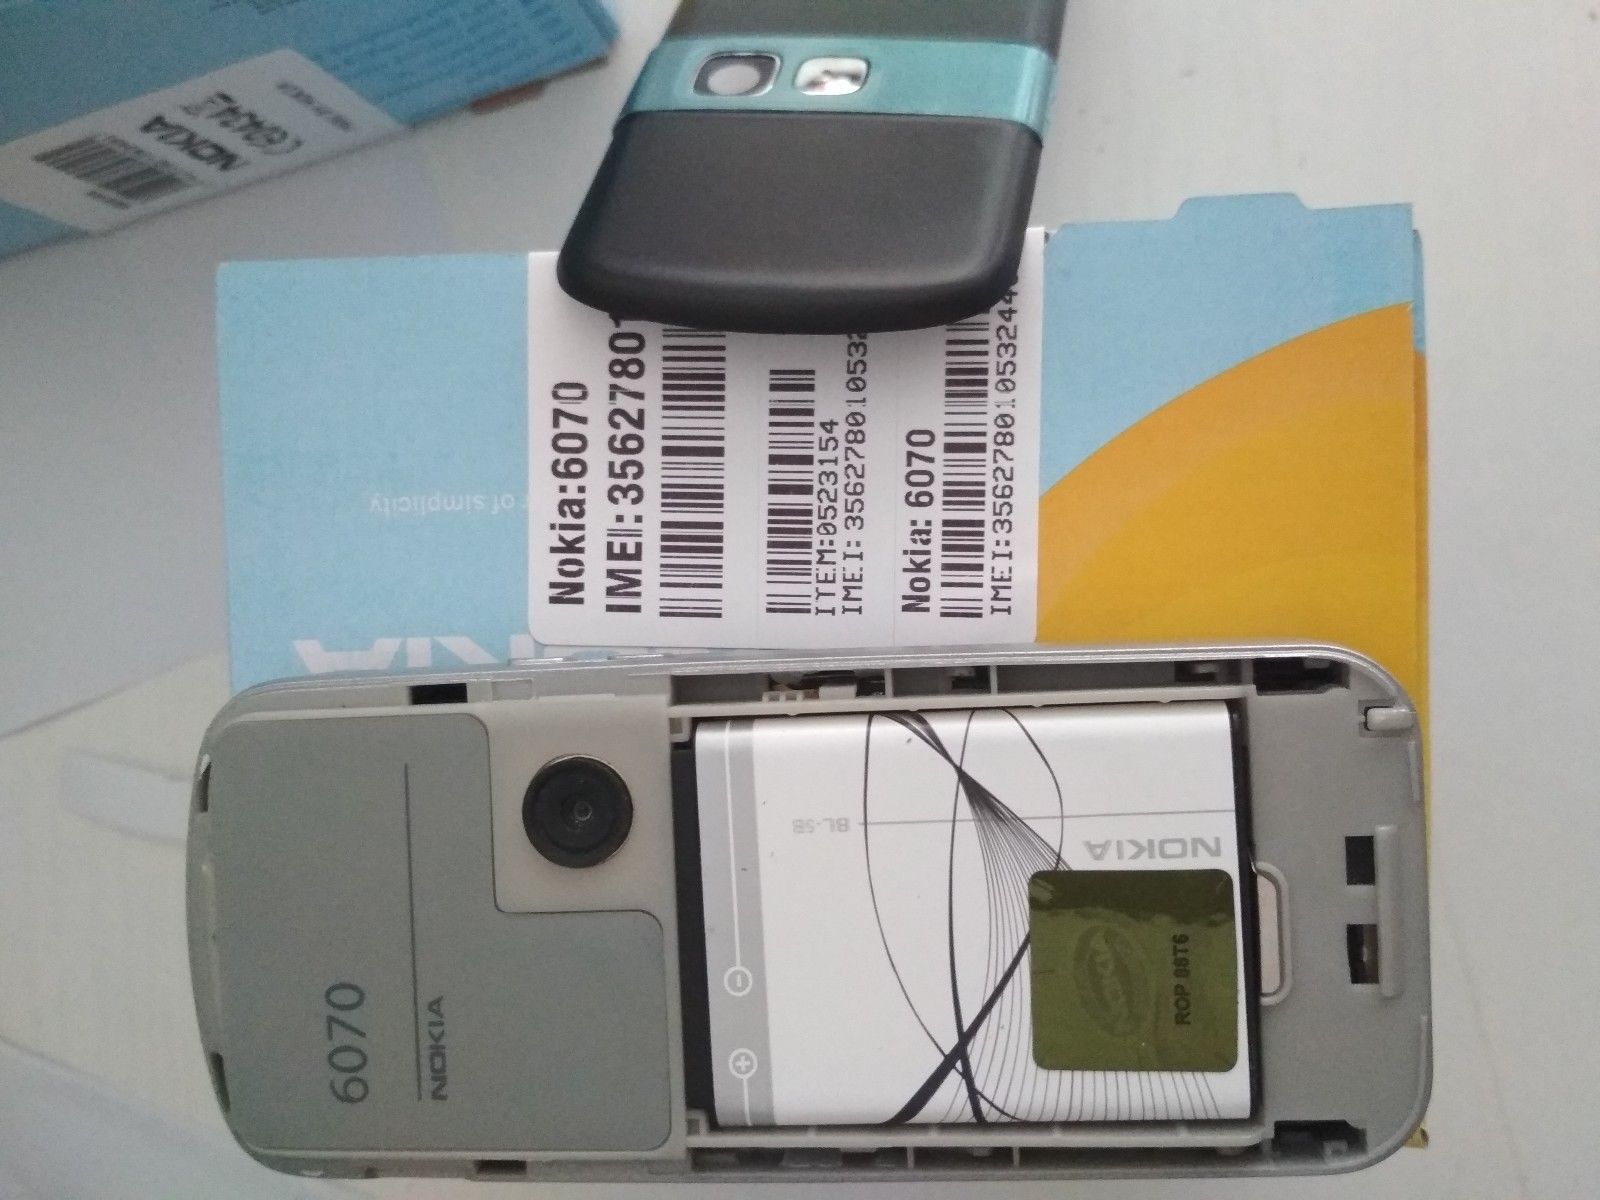 Nokia 6070 - Silver (Unlocked) Cellular Phone | eBay